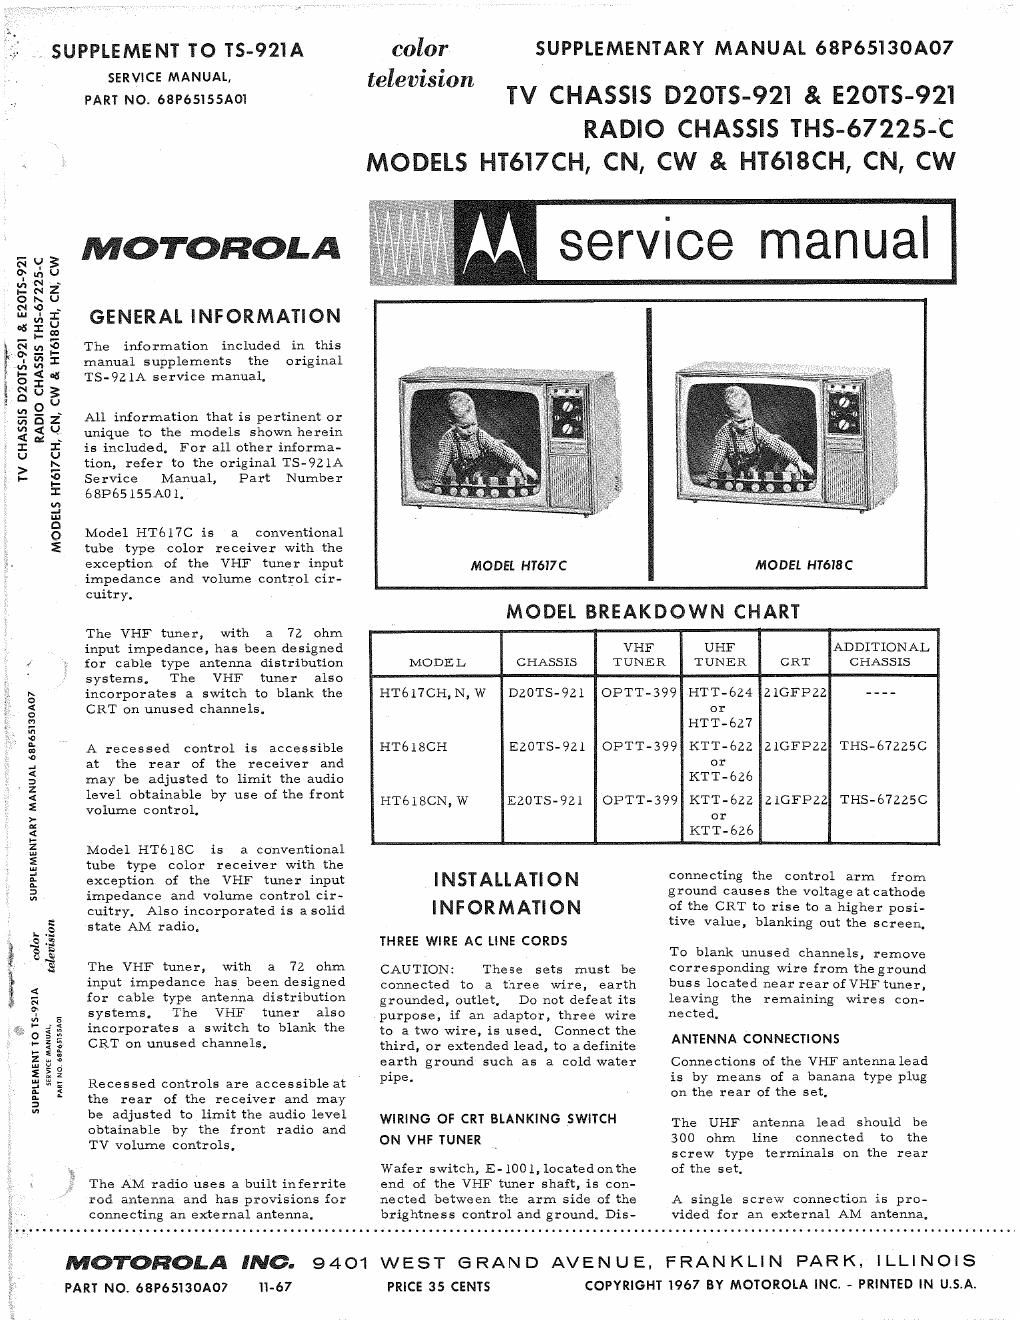 motorola ht 618 cn service manual